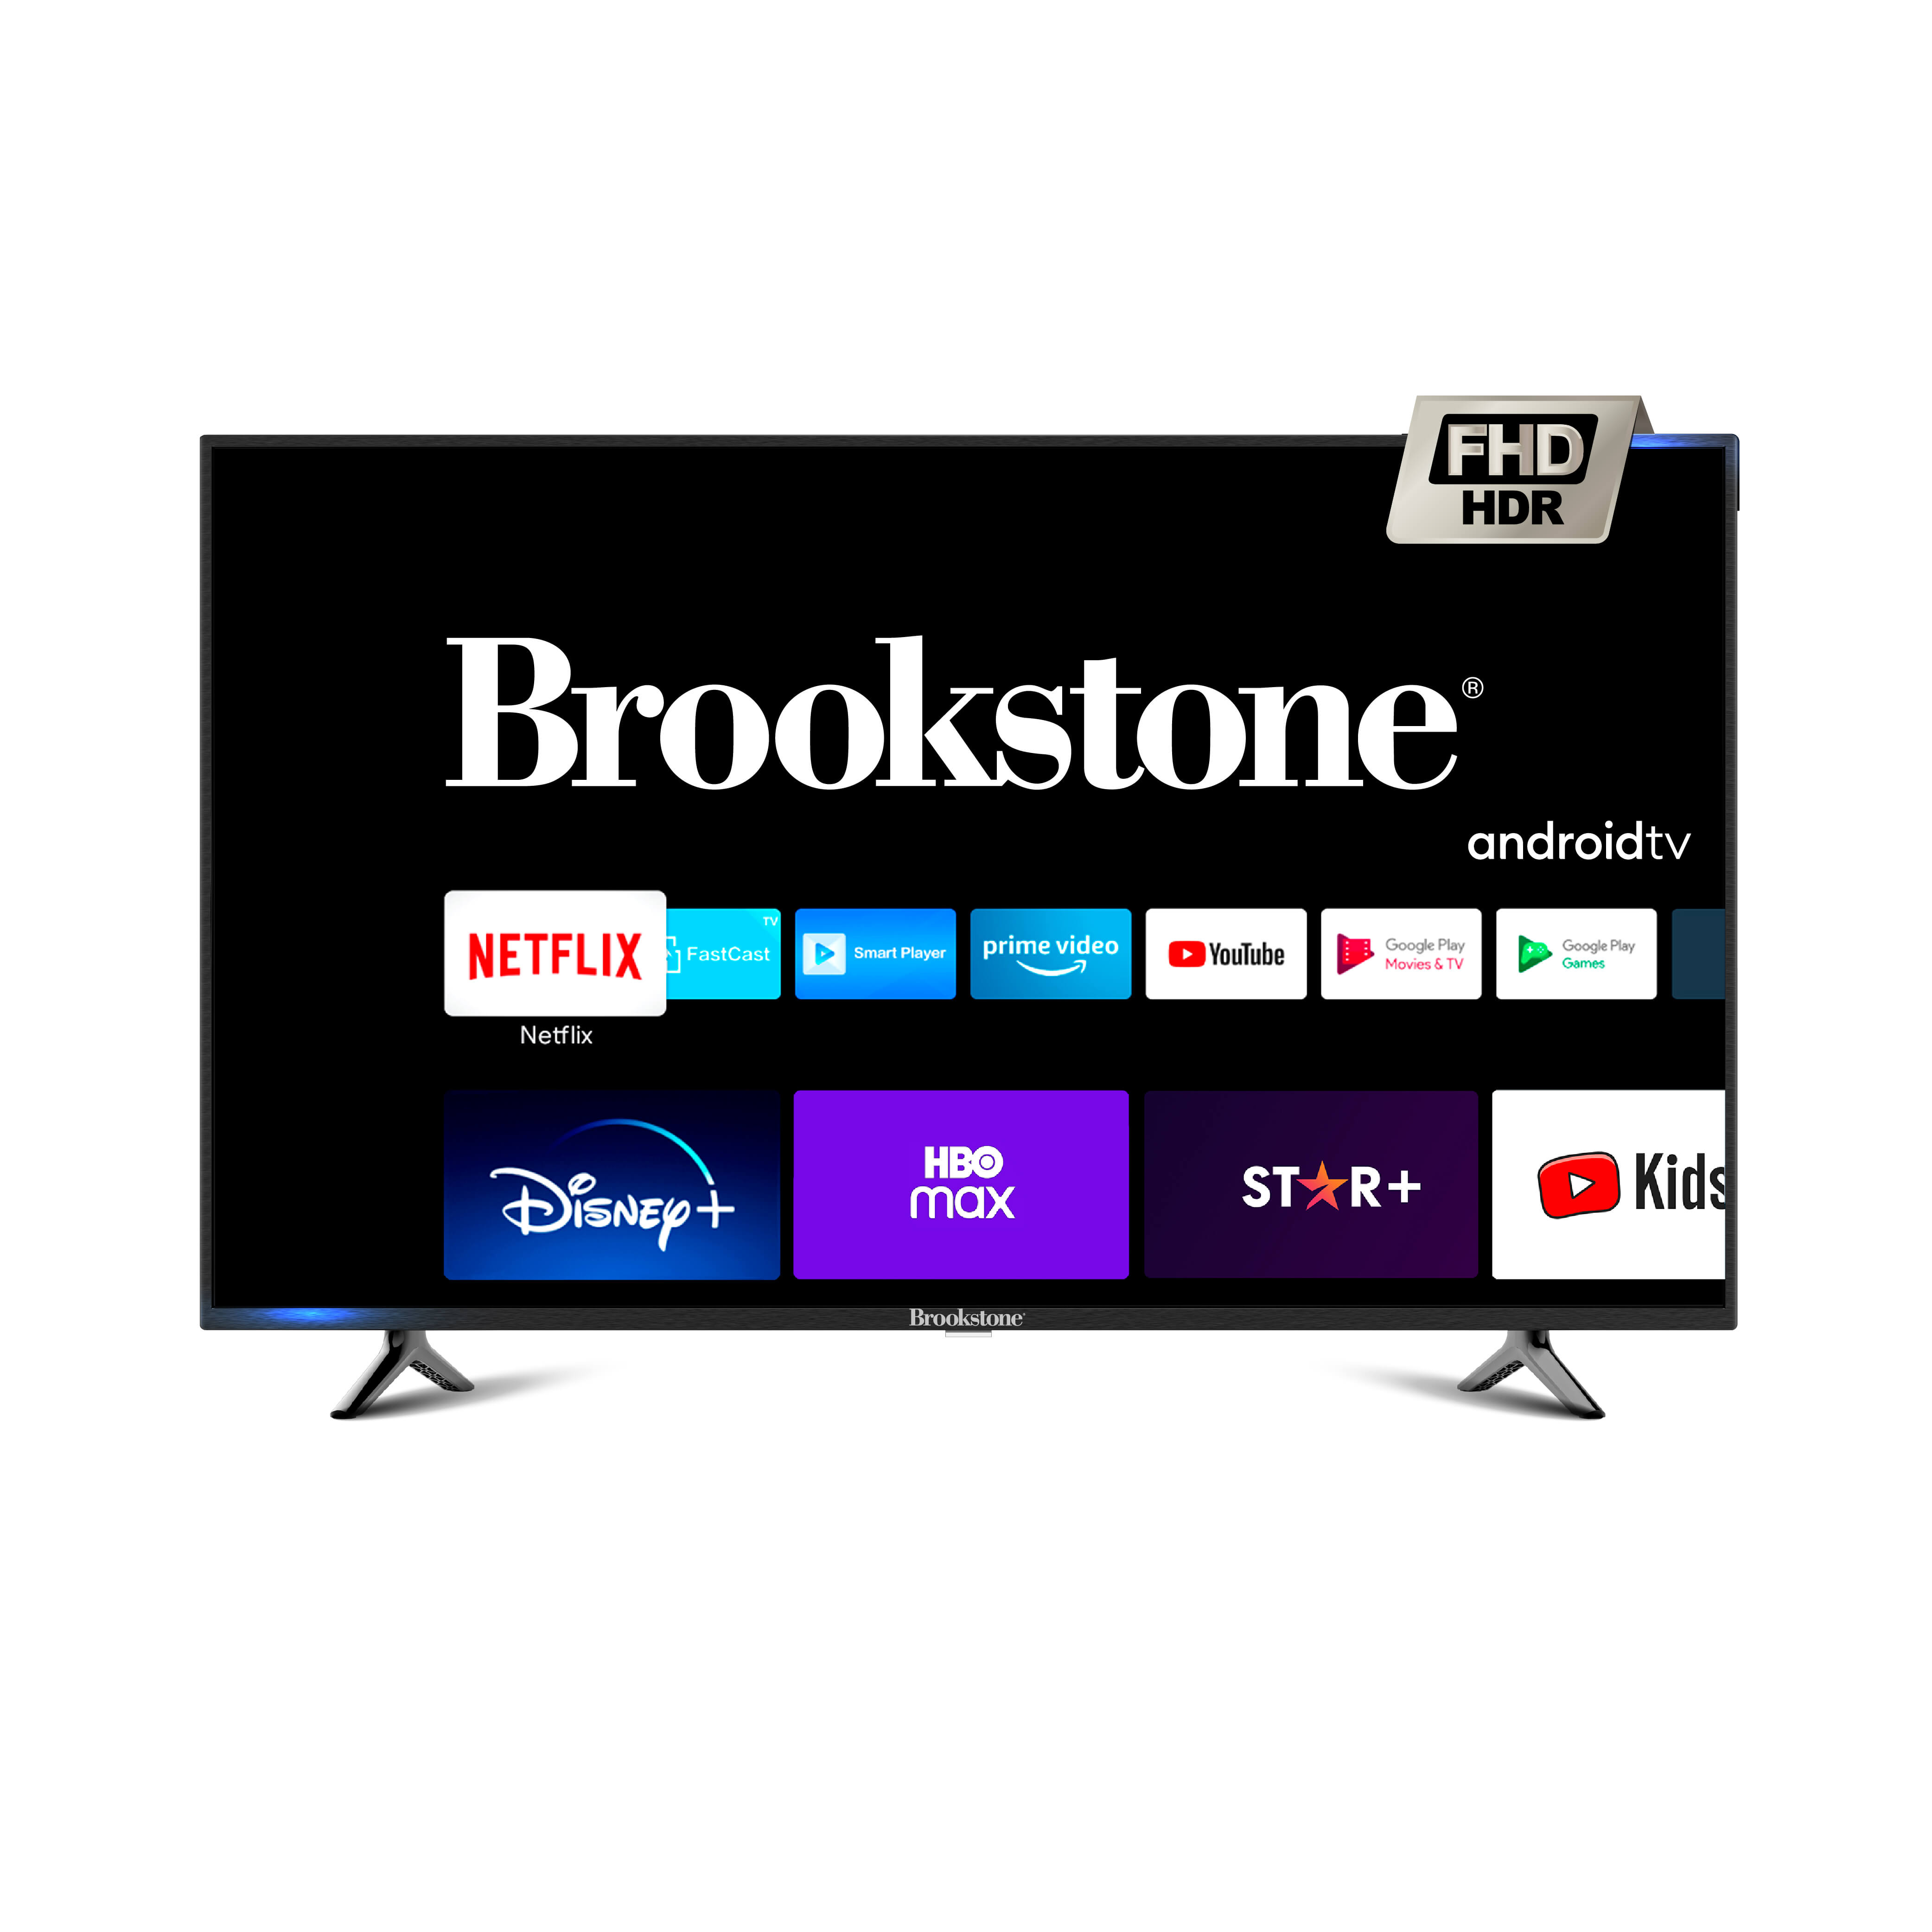 Brookstone Full HD Smart TV Android 42 - Brookstone